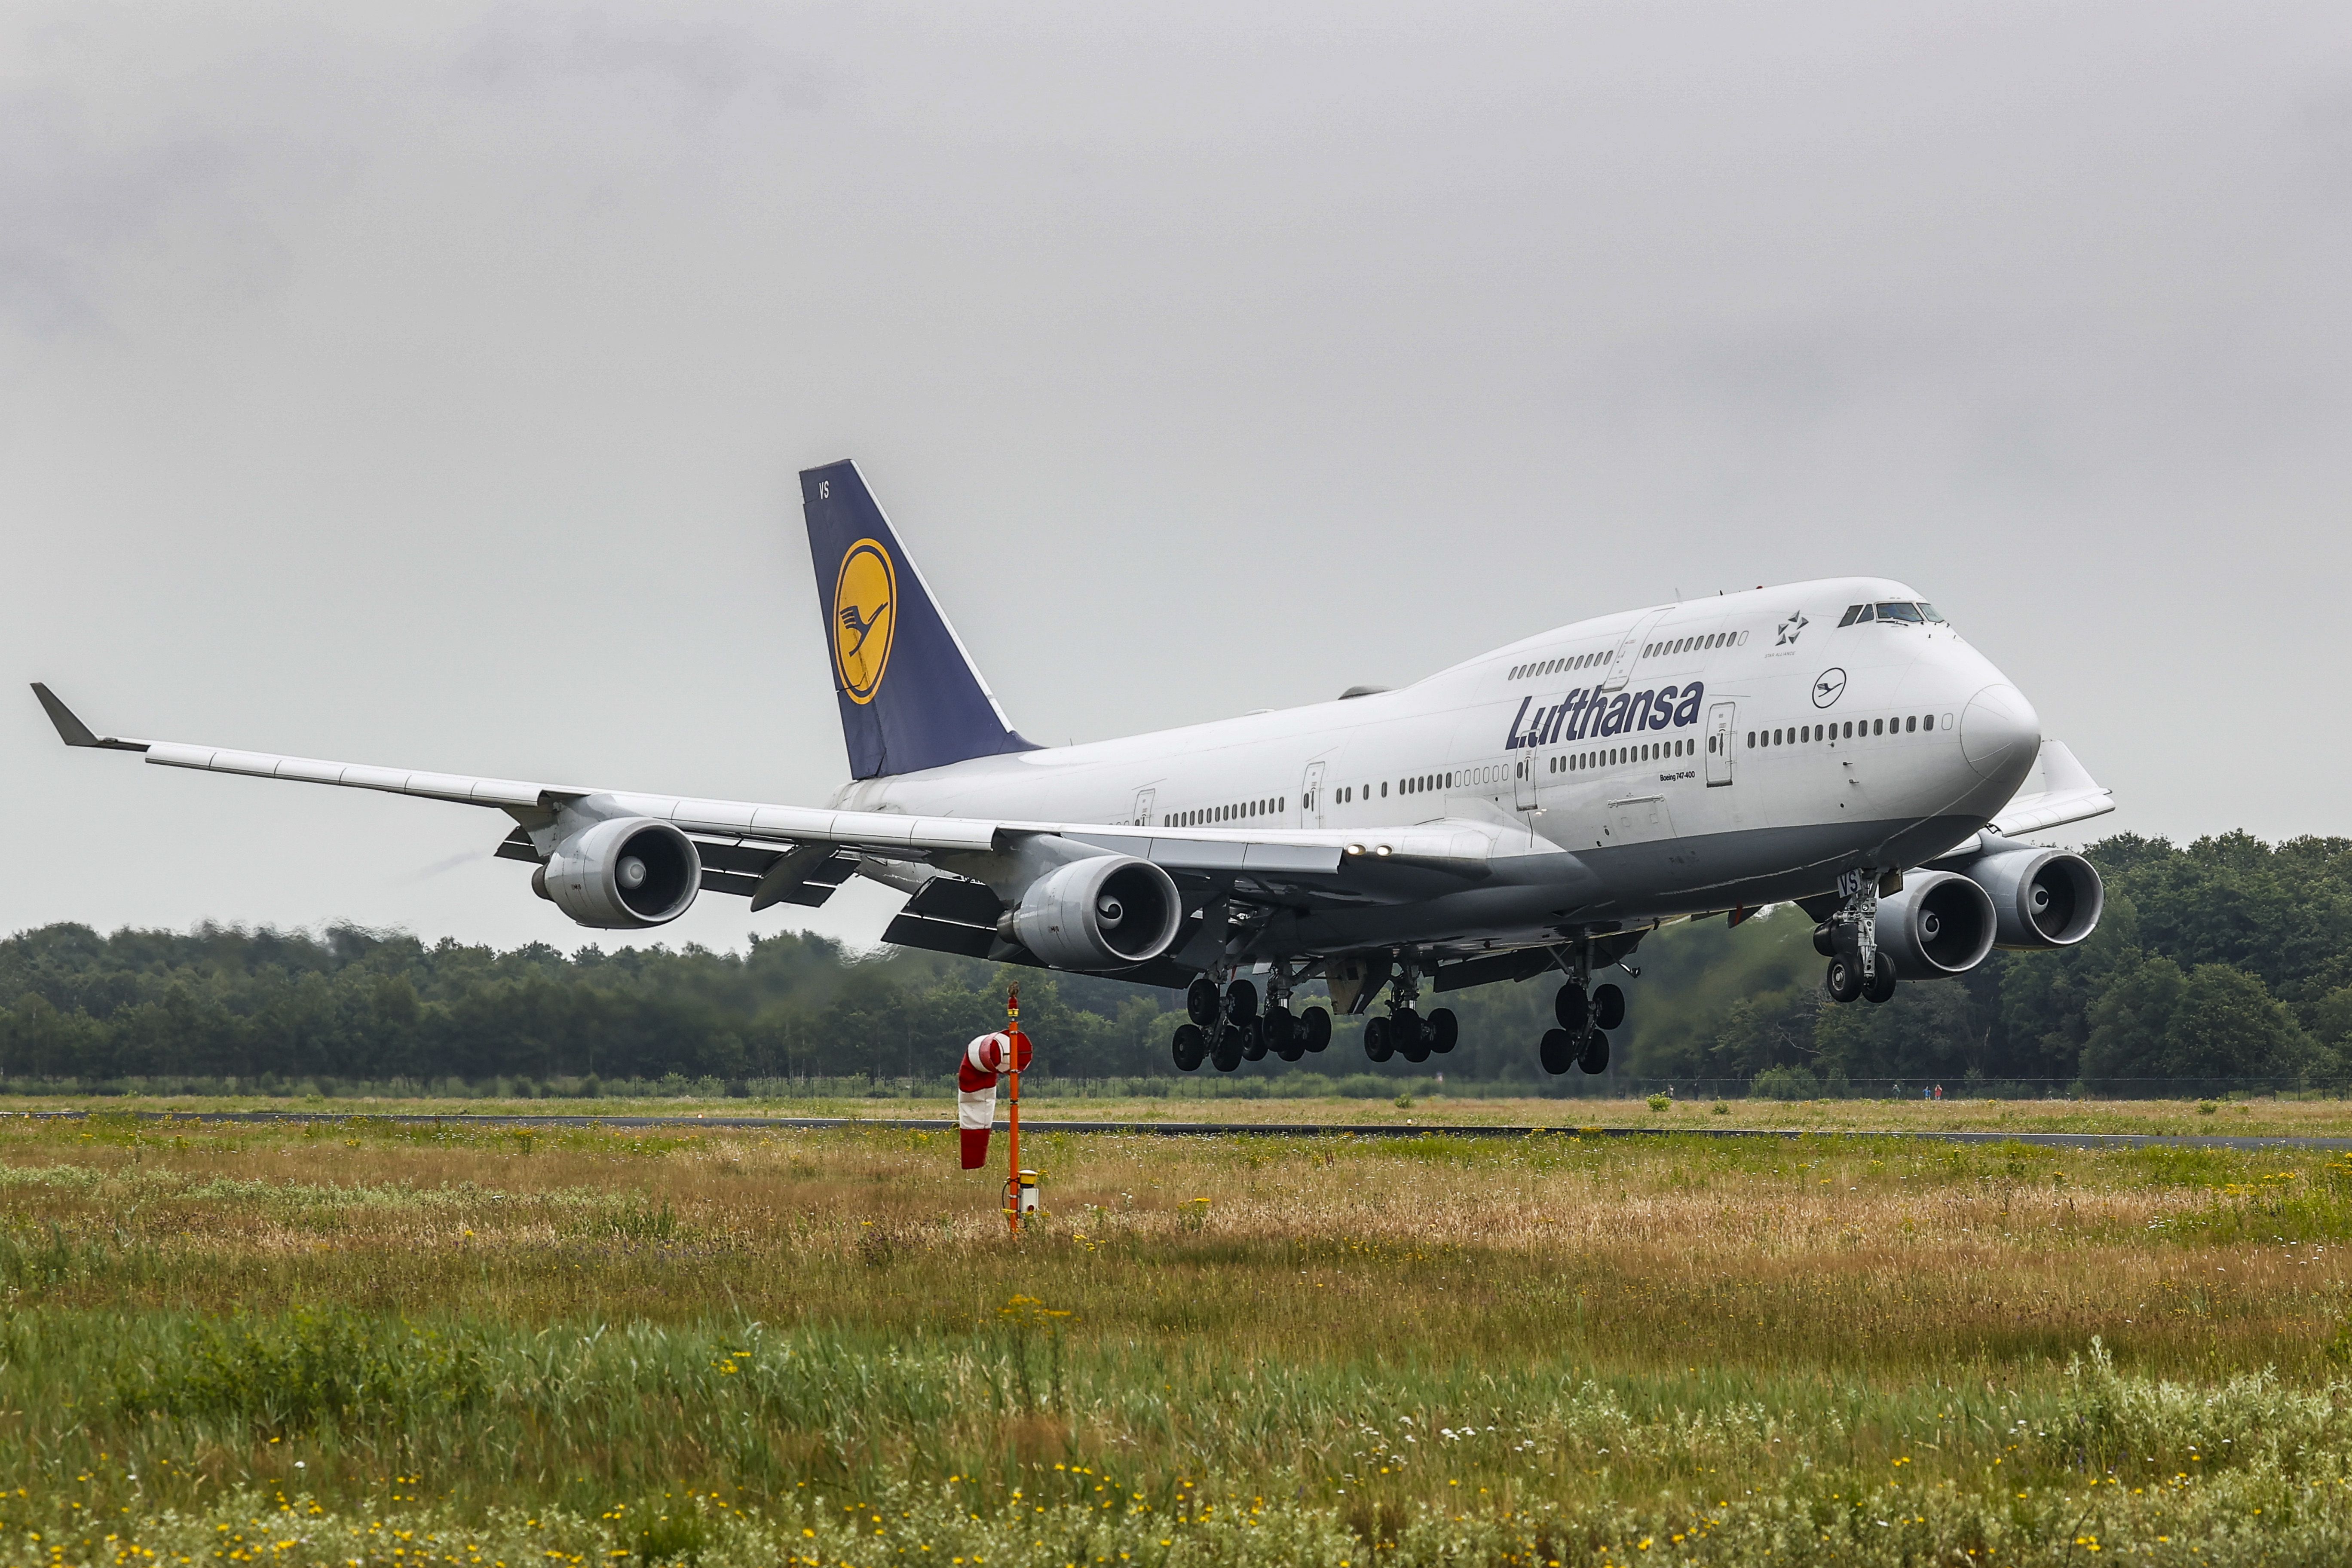 Lufthansa Boeing 747-400  lands at Twente Airport in Enschede, the Netherlands